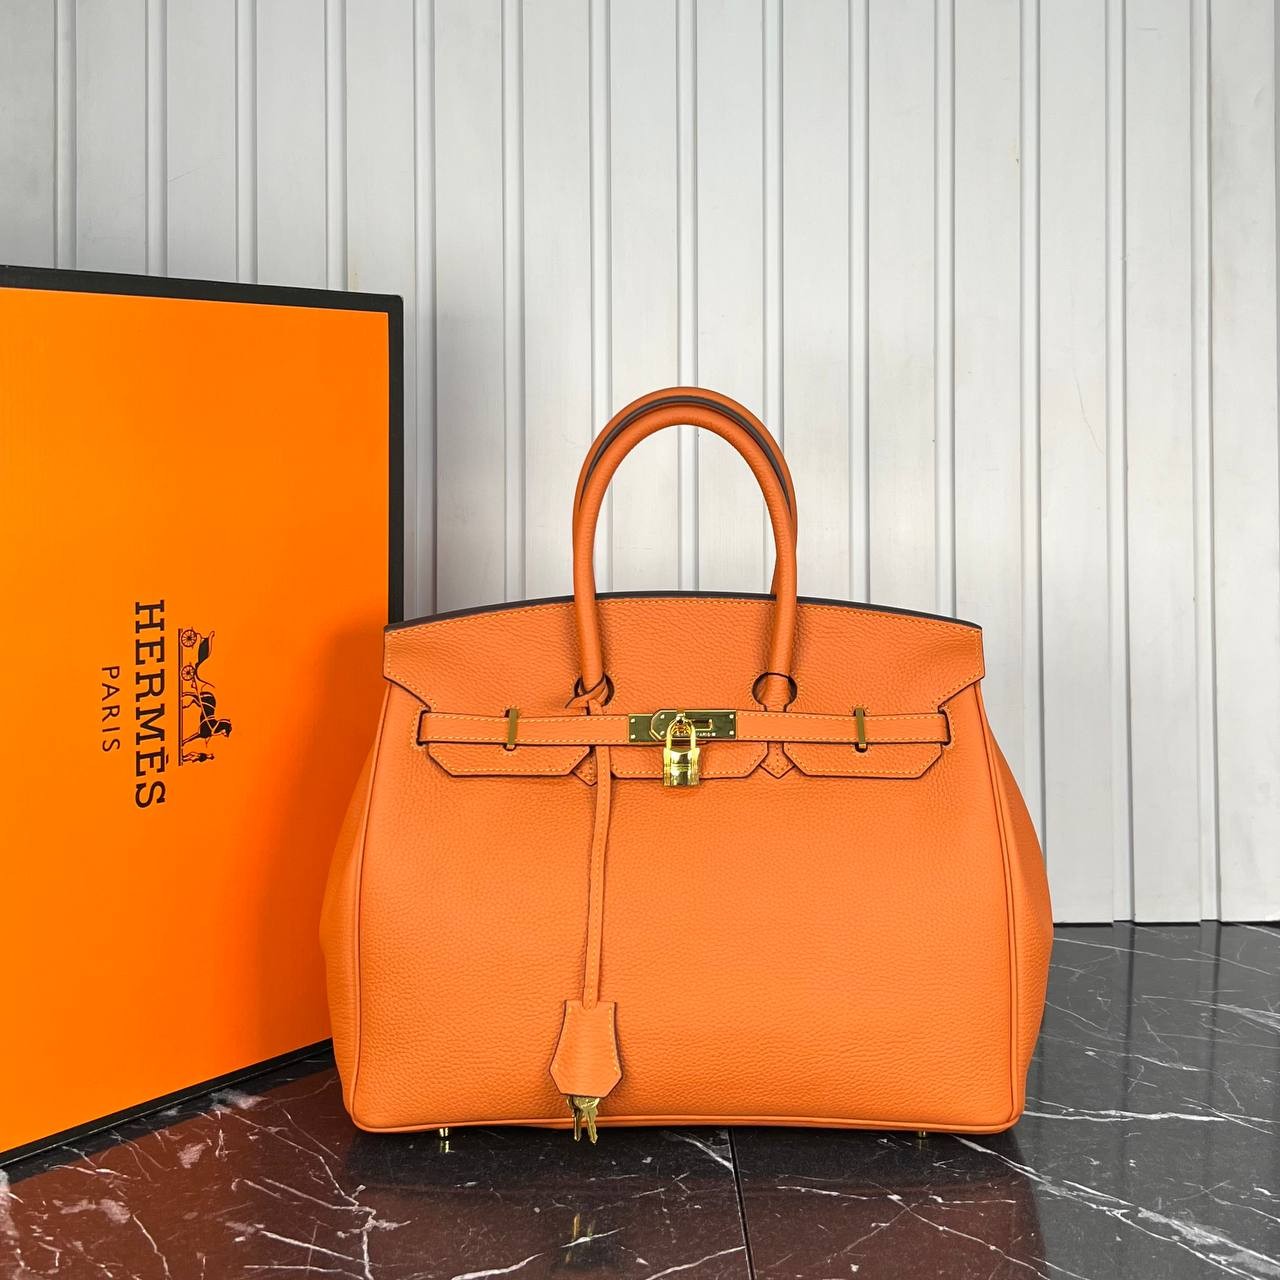 Hermes Birkin Bag 35 Cm 